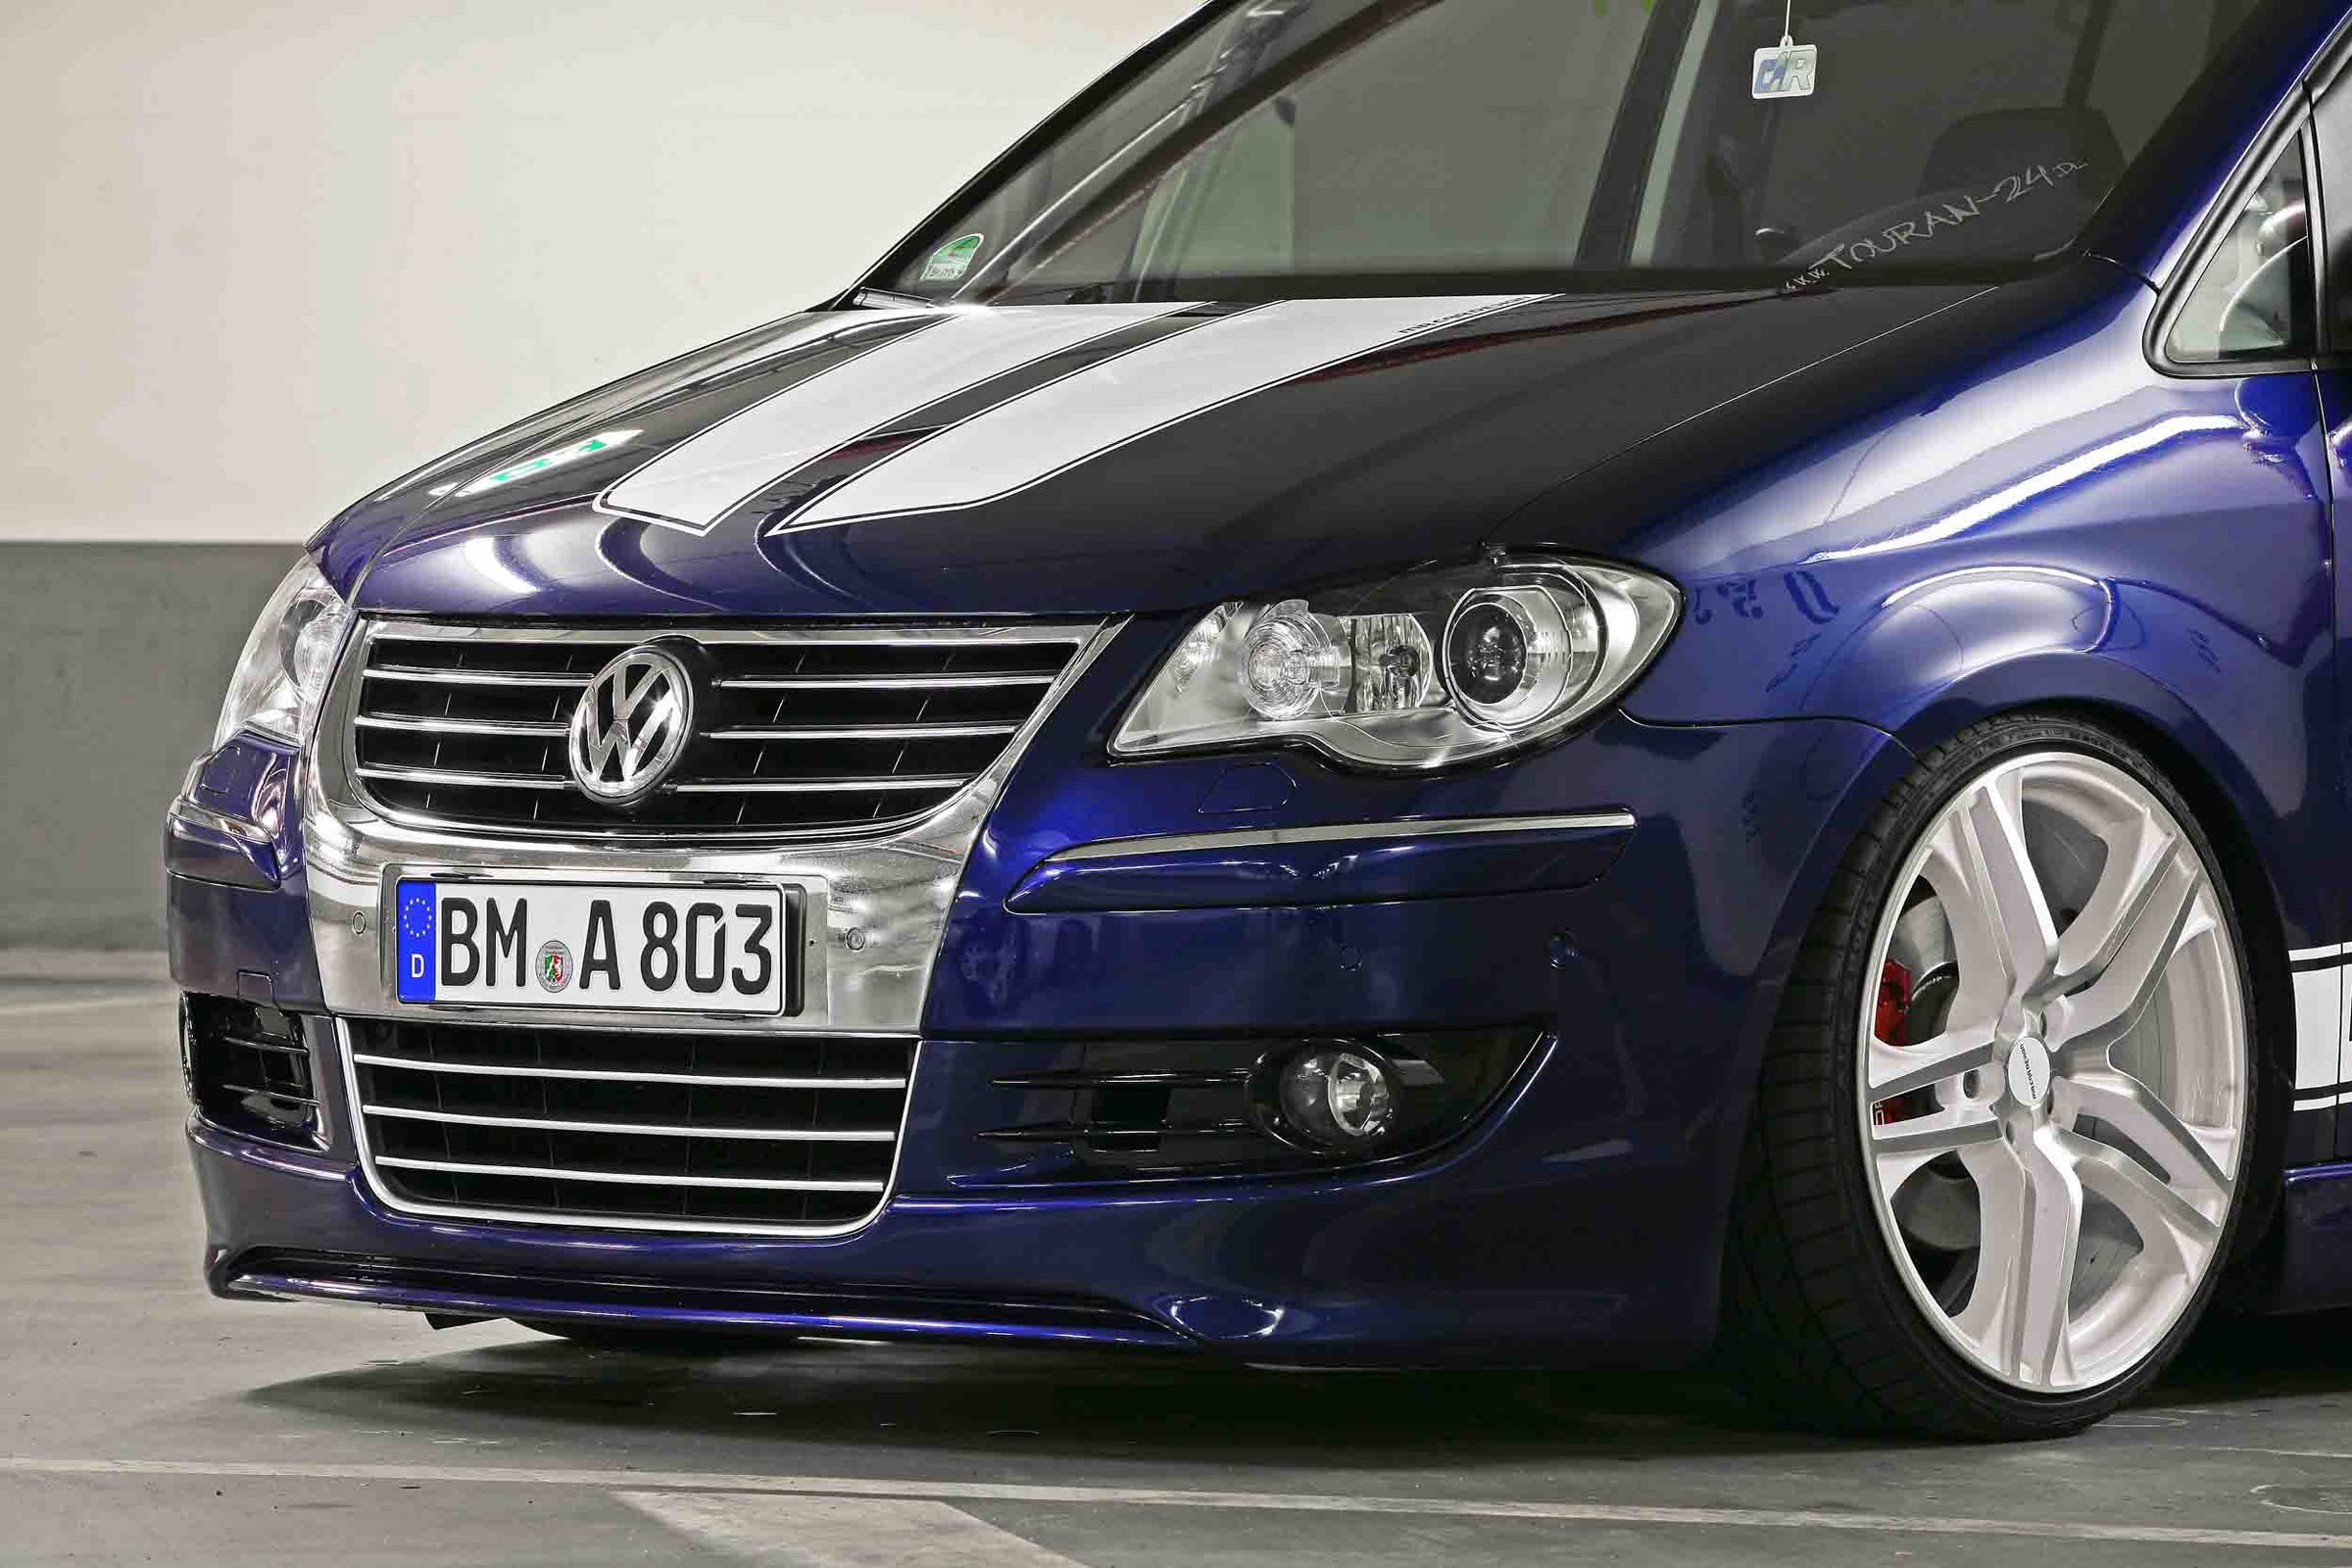 MR Car Design Volkswagen Touran